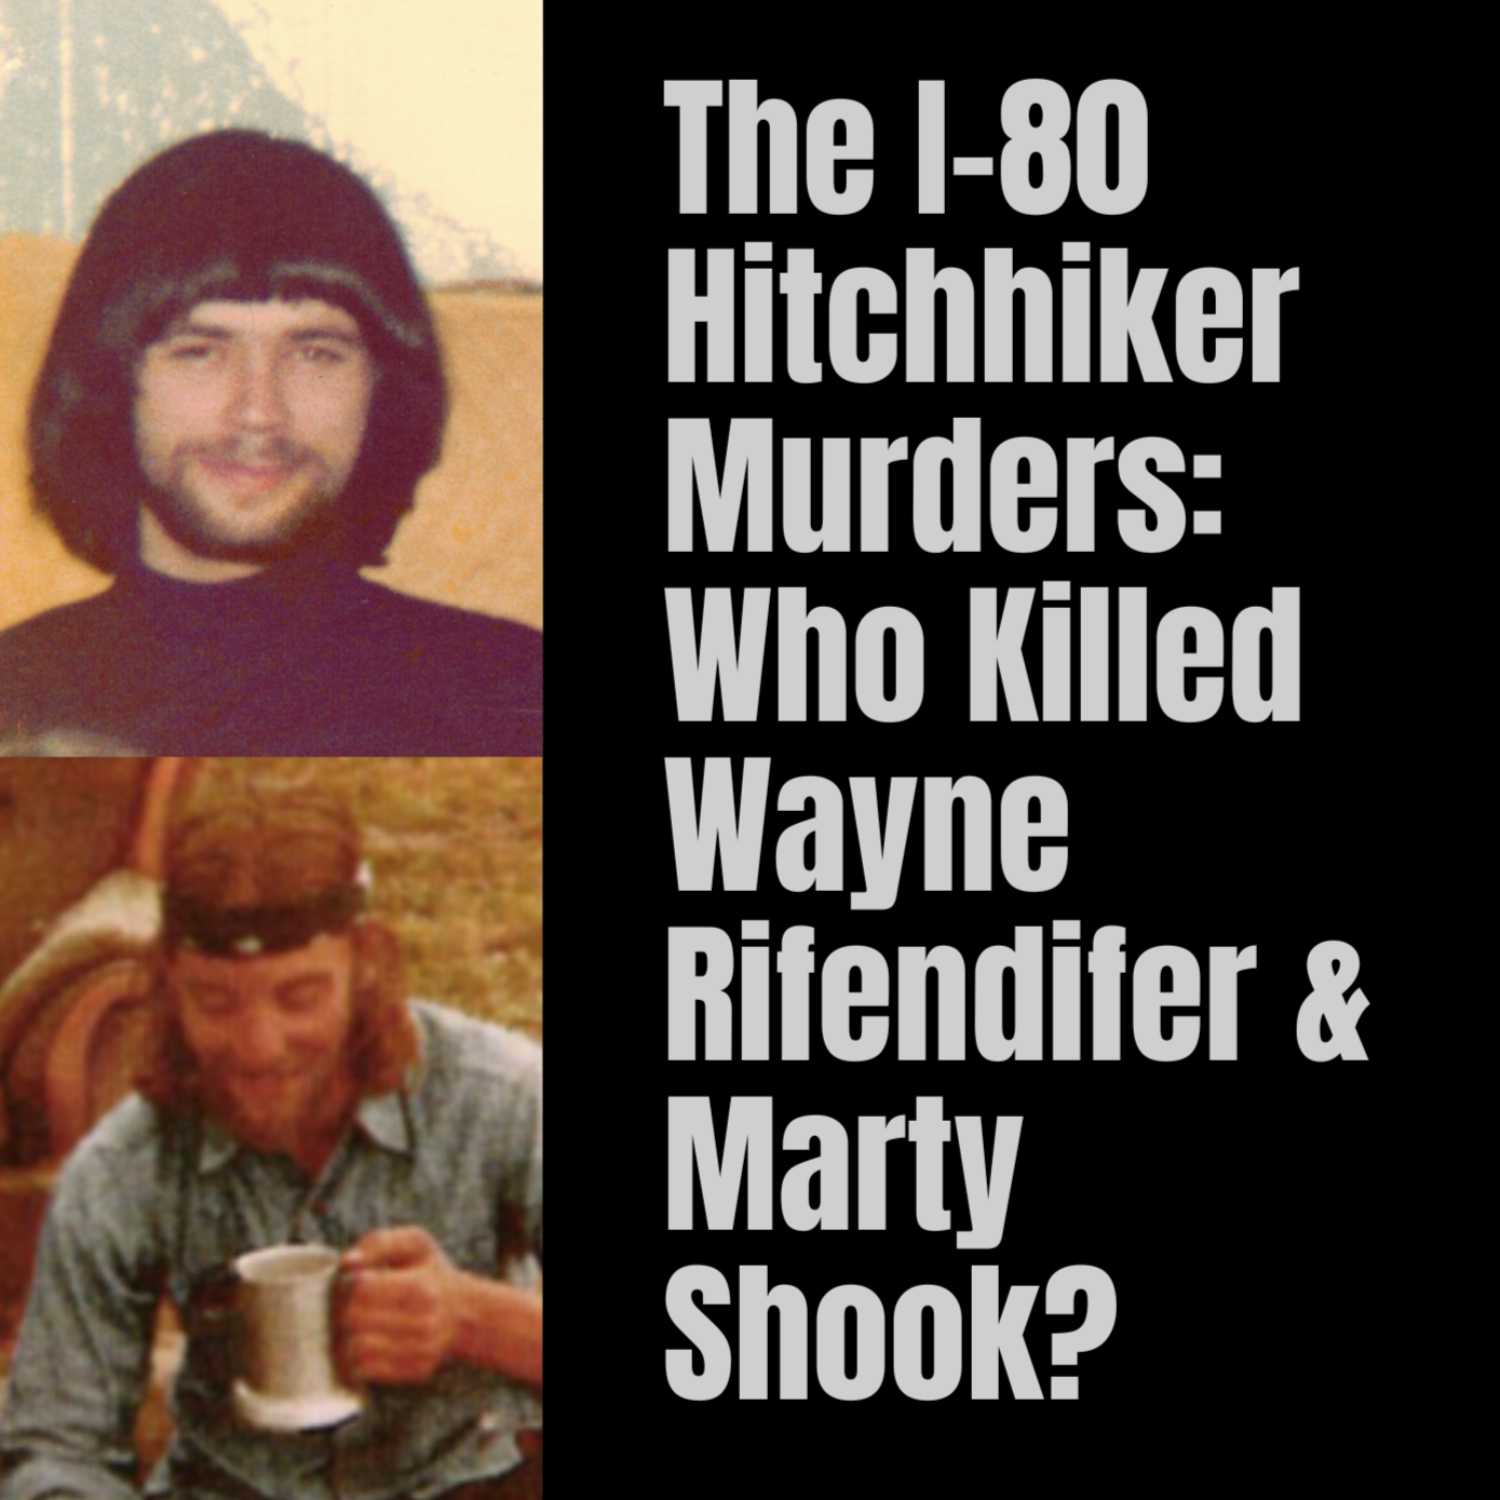 The I-80 Hitchhiker Murders: Who Killed Wayne Rifendifer & Marty Shook?